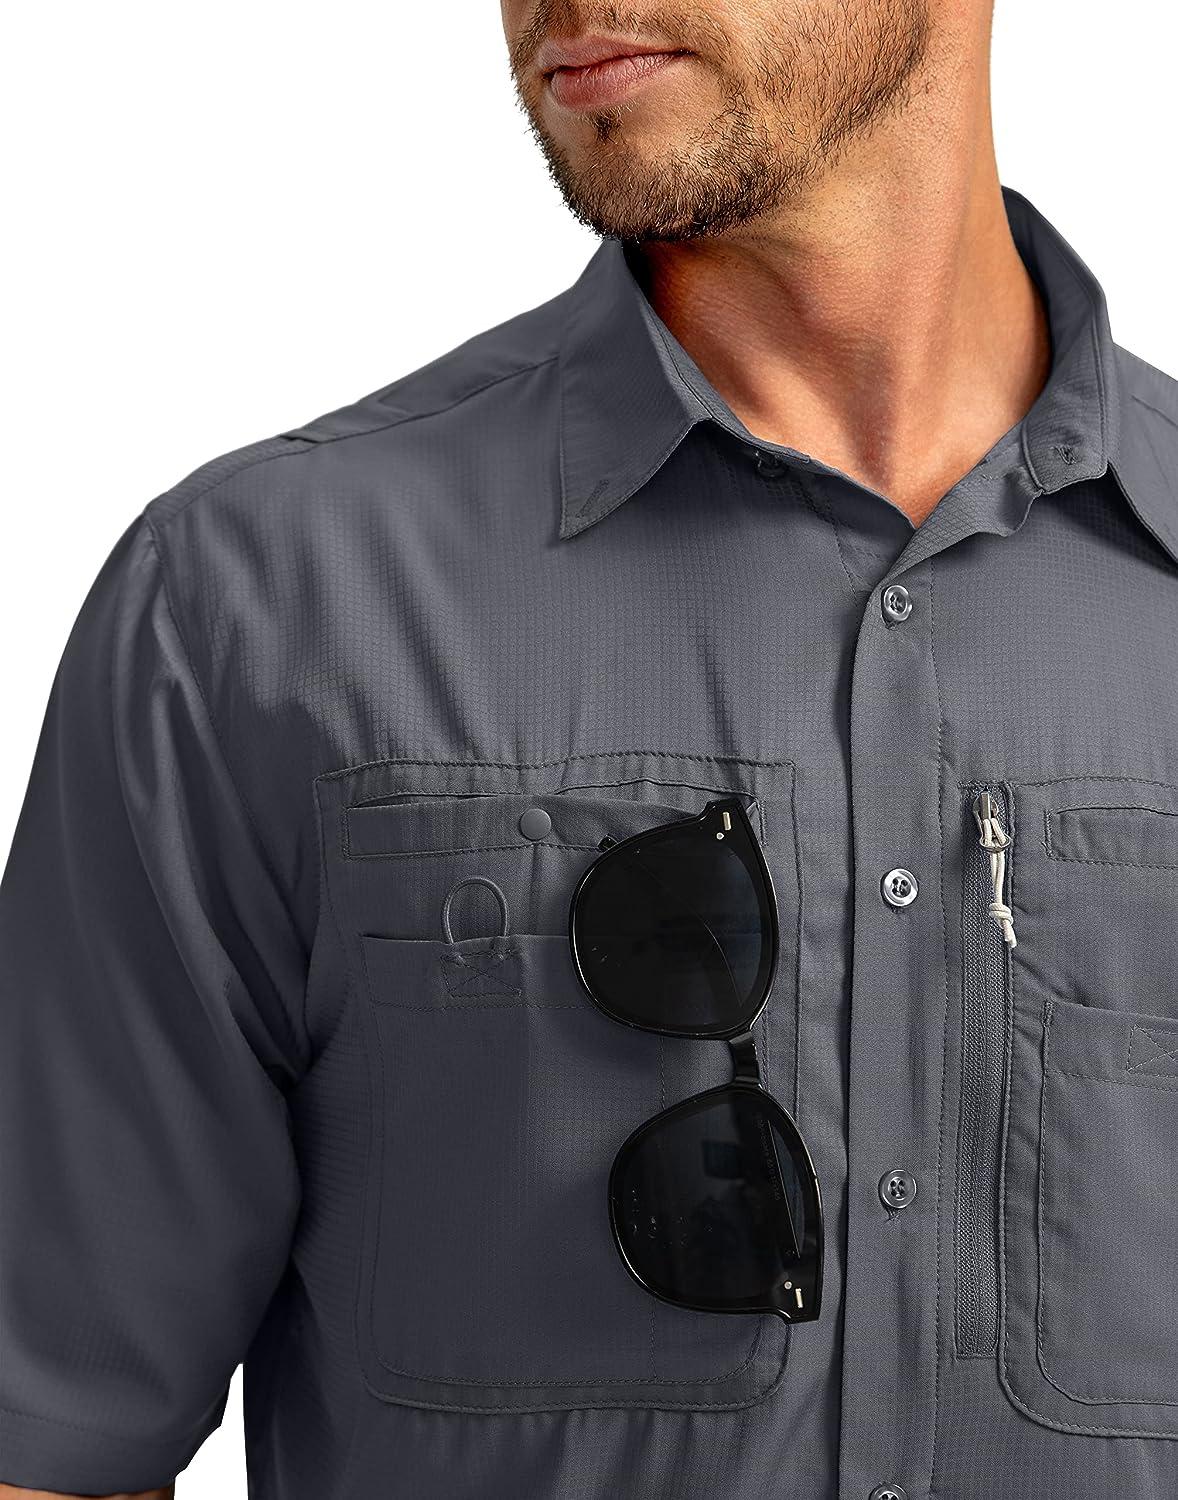 G Gradual Men's Short Sleeve Fishing Shirts Lightweight UPF 50+